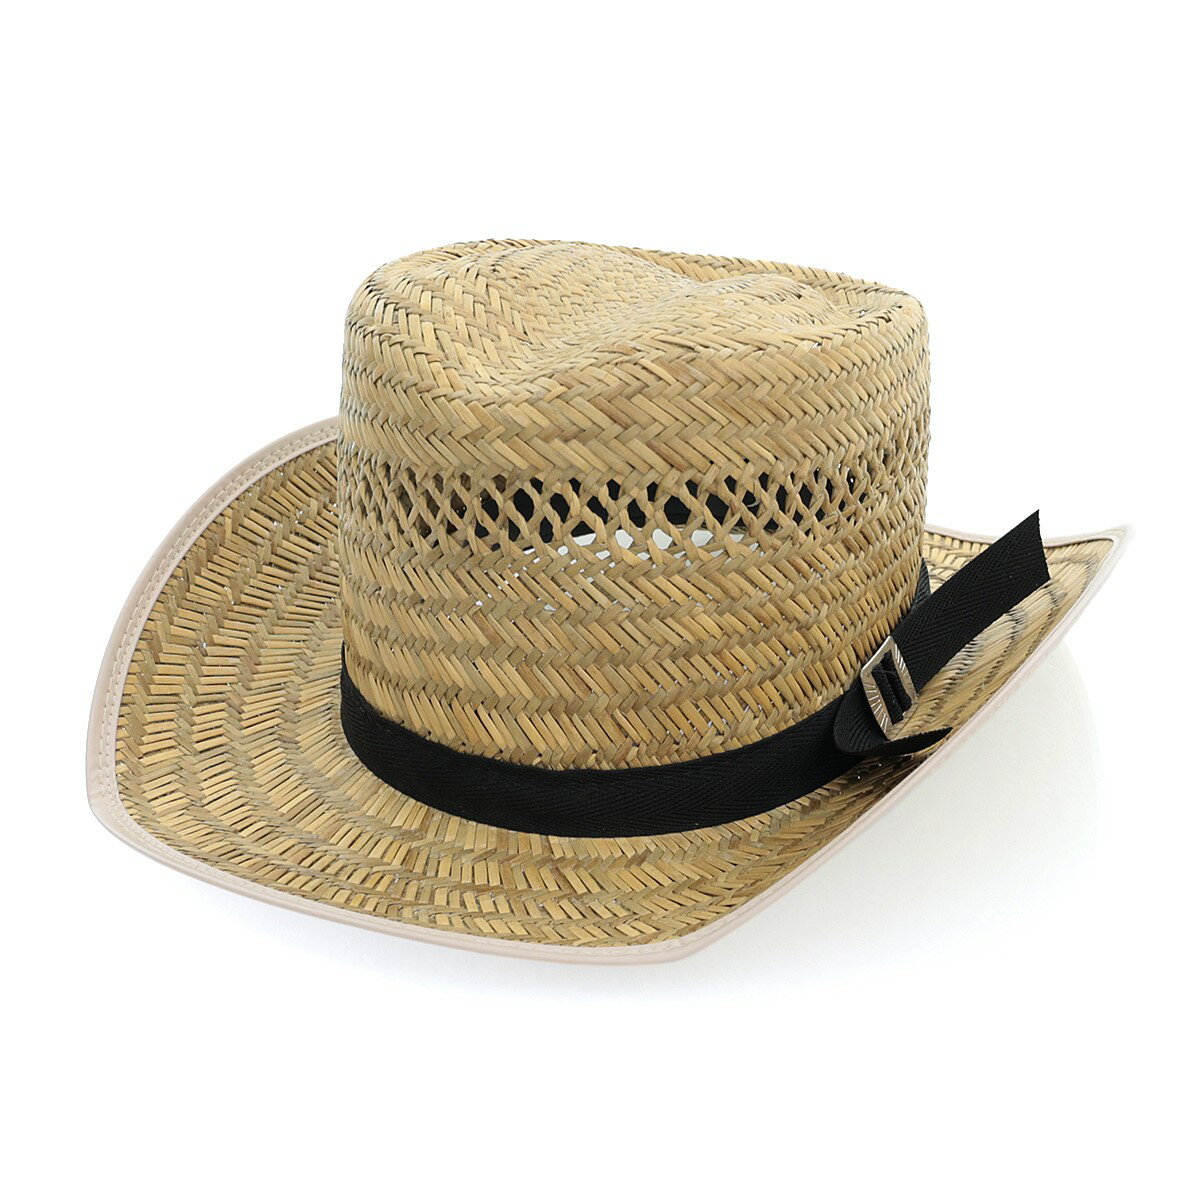 yÁzSunset Straw Hats@3^4 Black Hat And Vented Seagrass Xg[nbg x[W y020524ziTZbgXg[nbgj